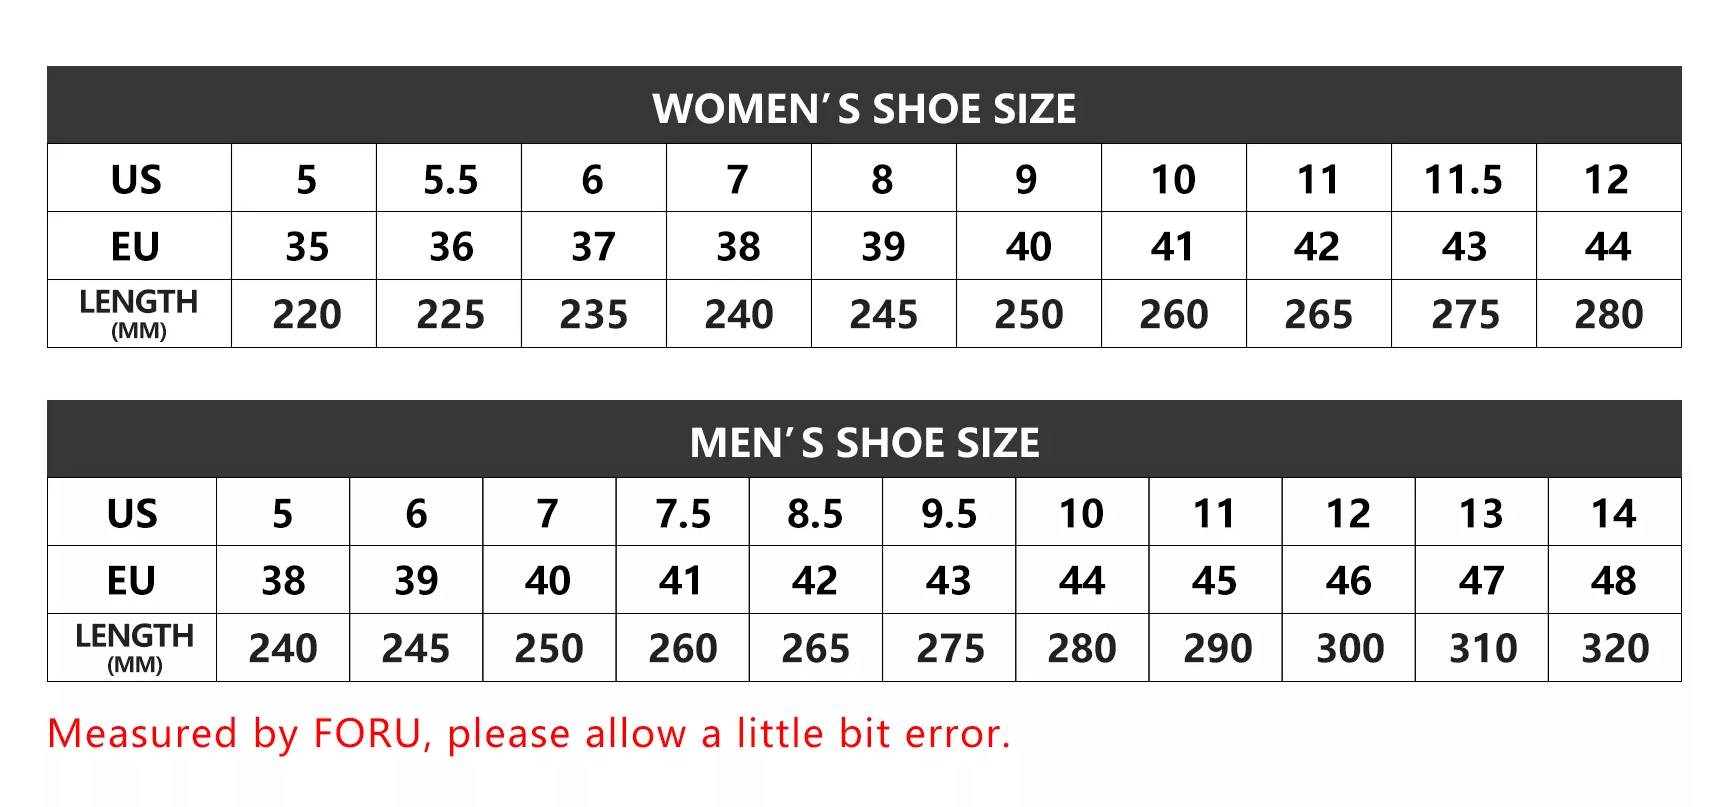 Boot Size Chart